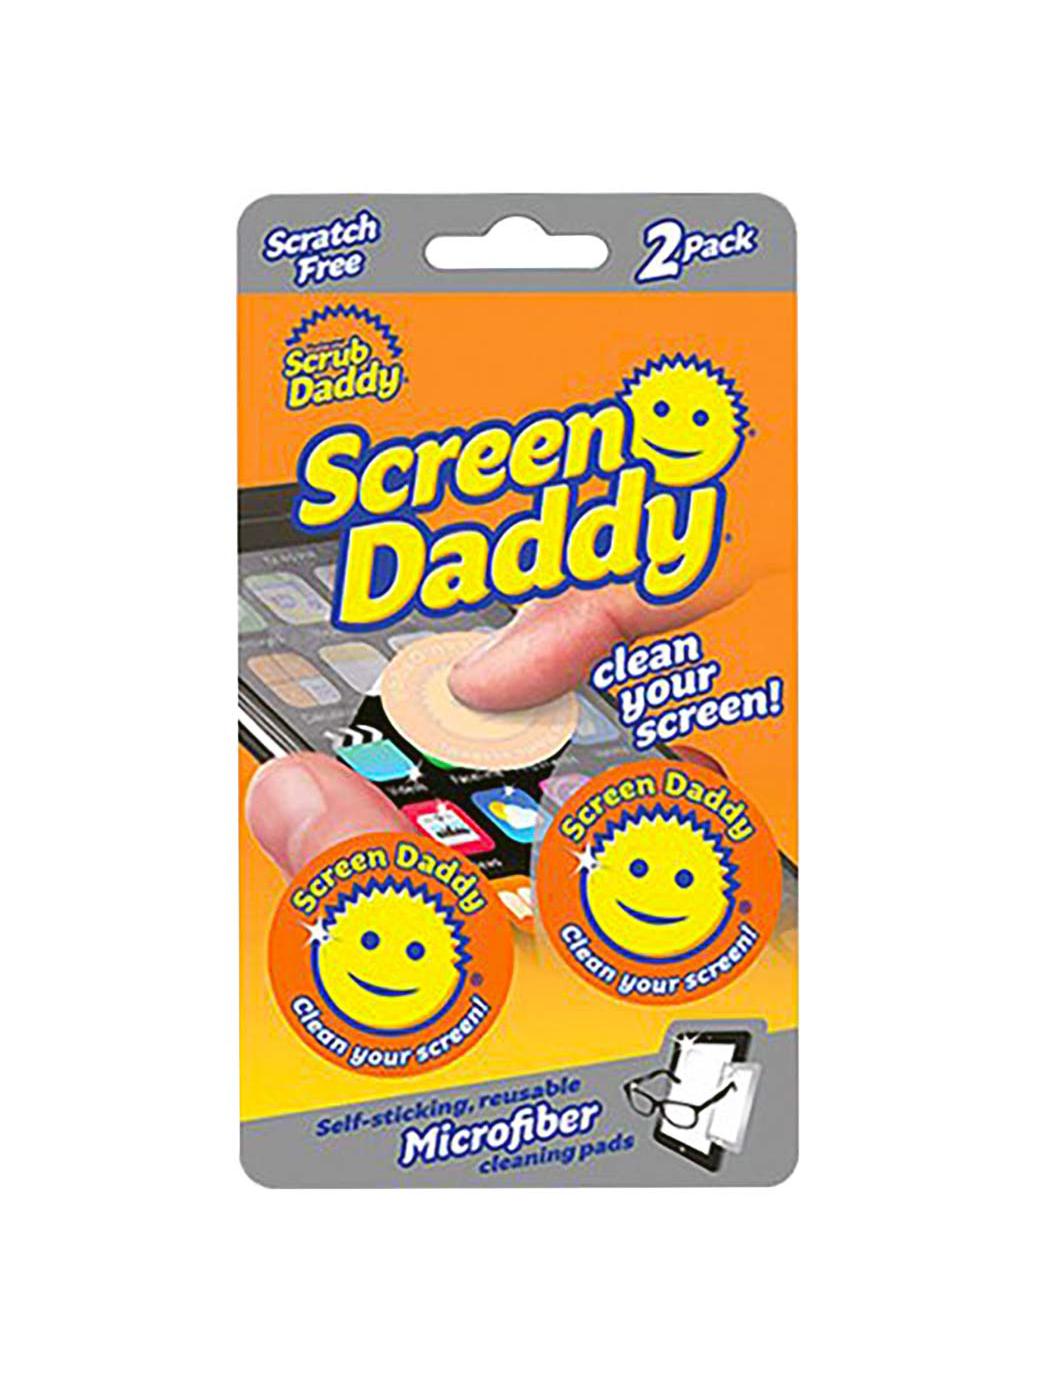 Scrub Daddy Dye Free Sponge Daddy - 3 ct